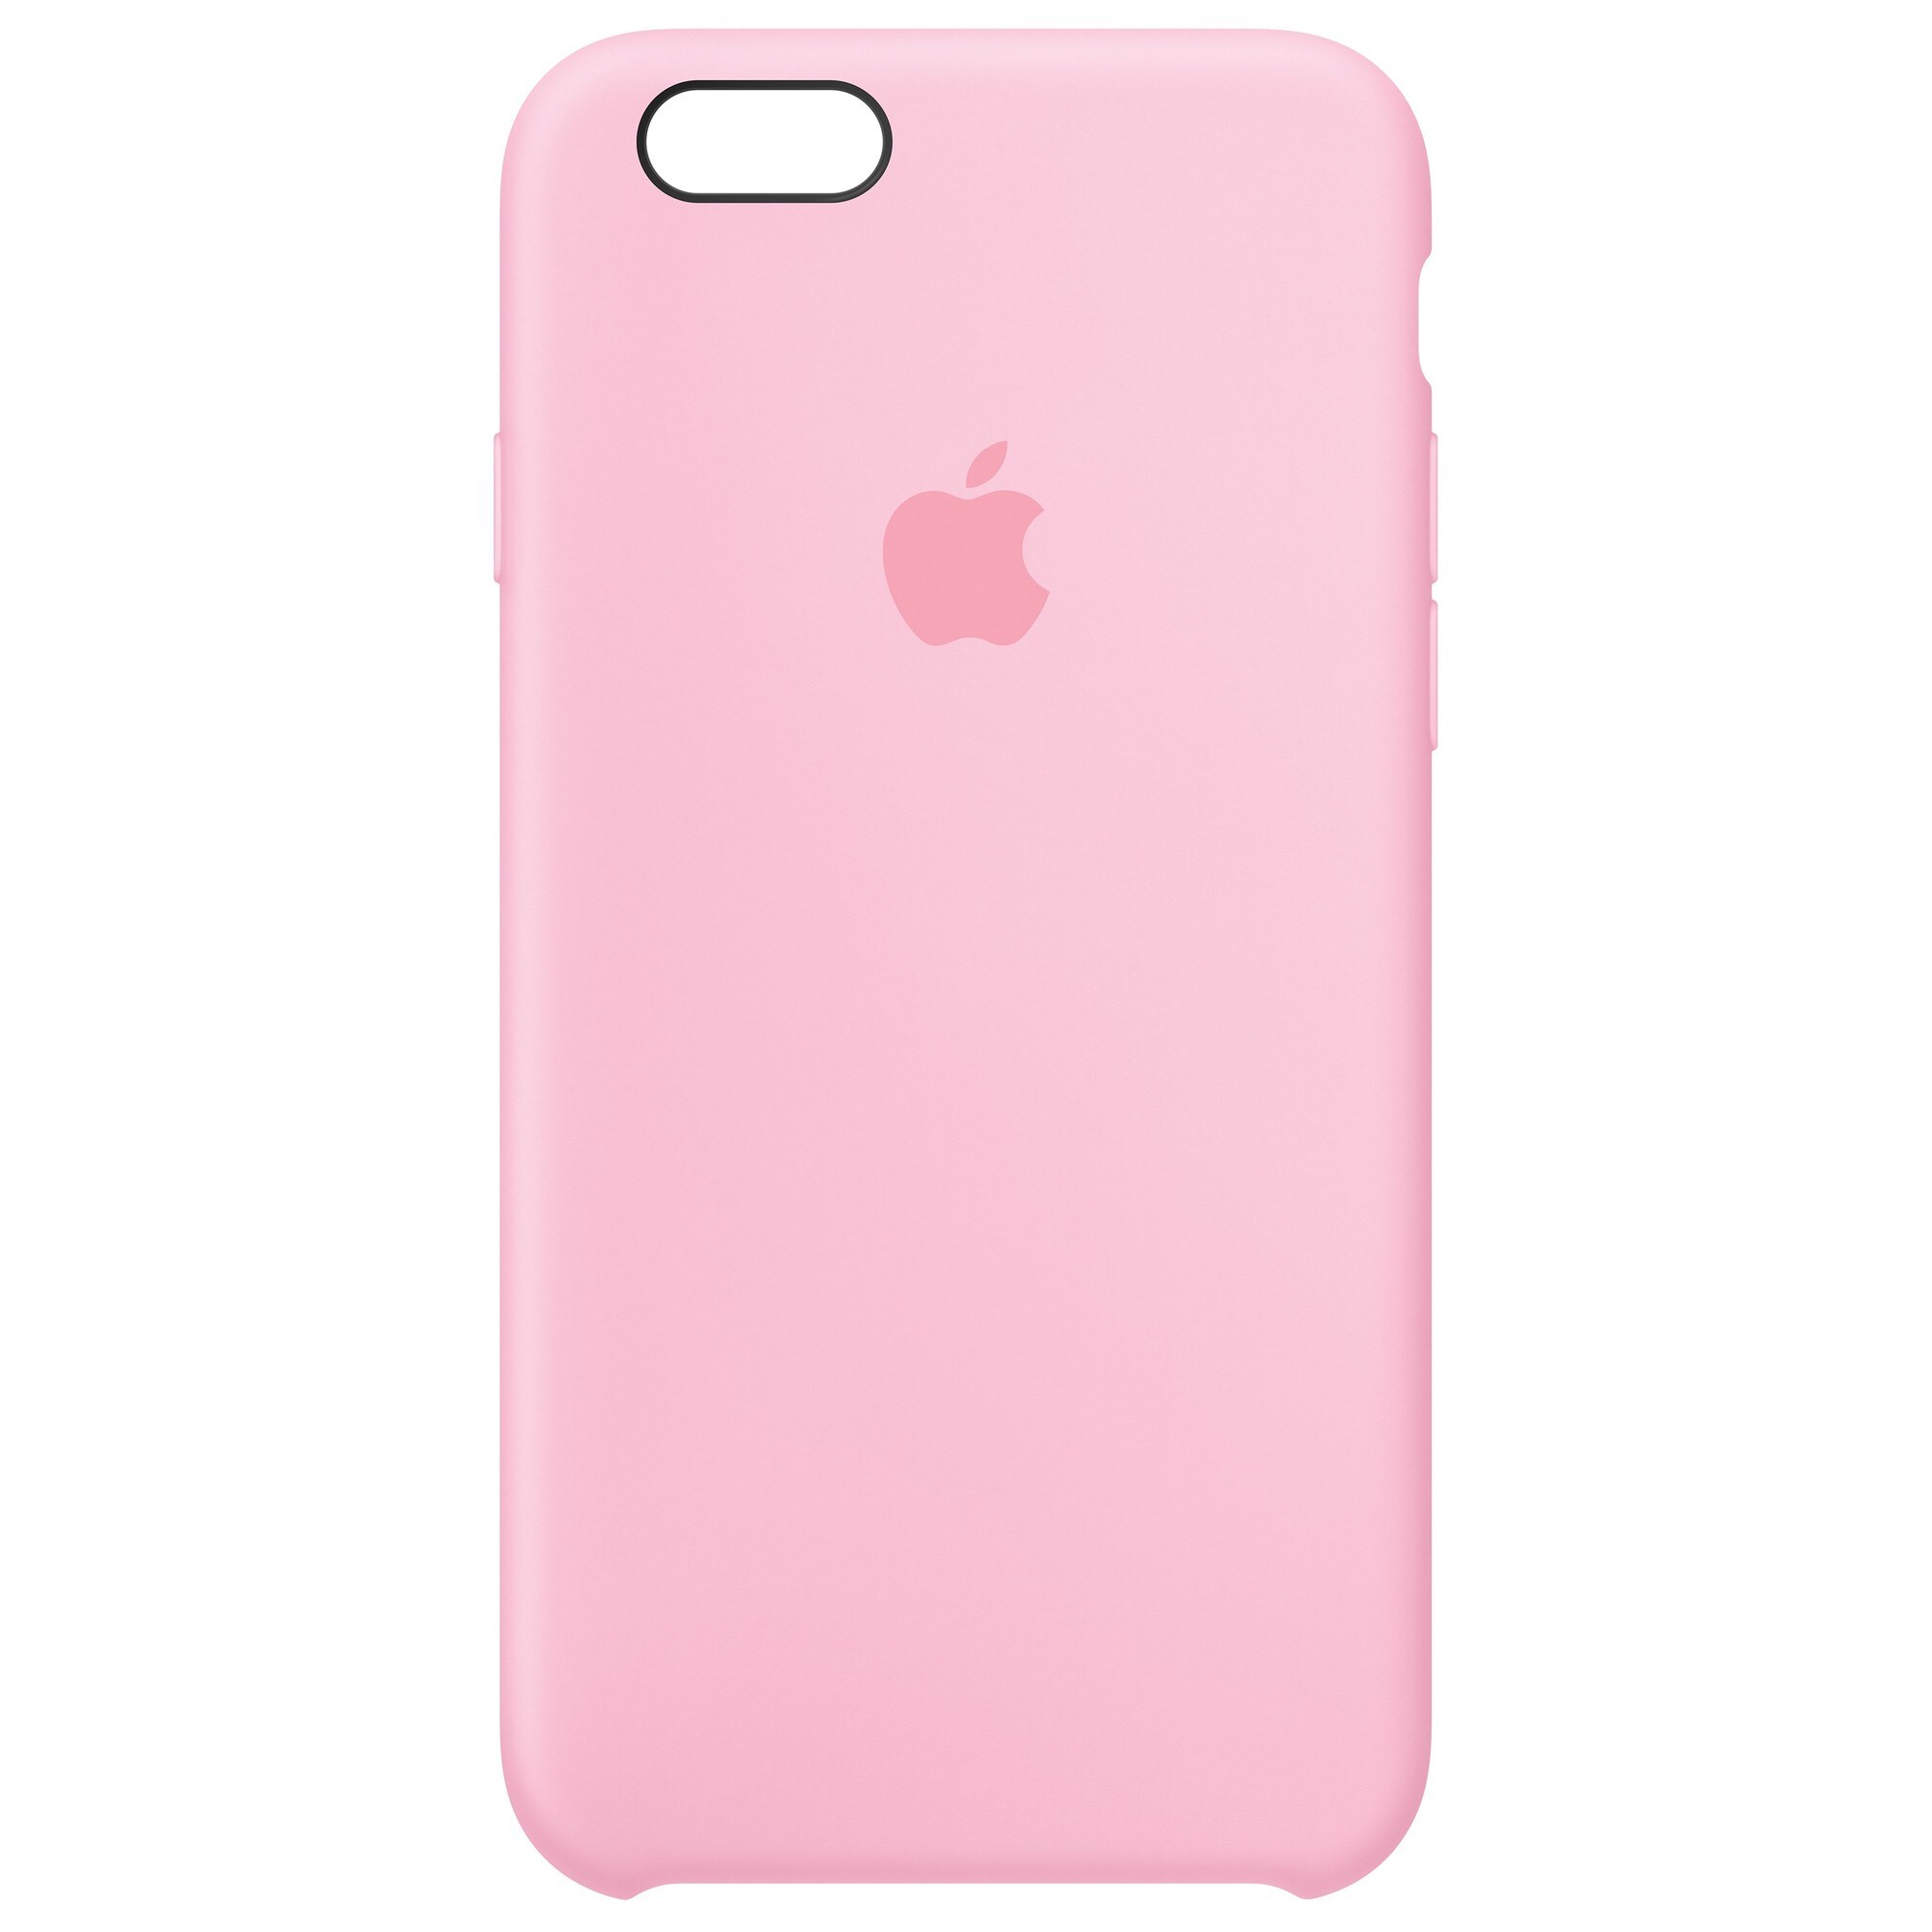 Apple iPhone 6s silikondeksel (lyserosa) - Deksler og etui til ...